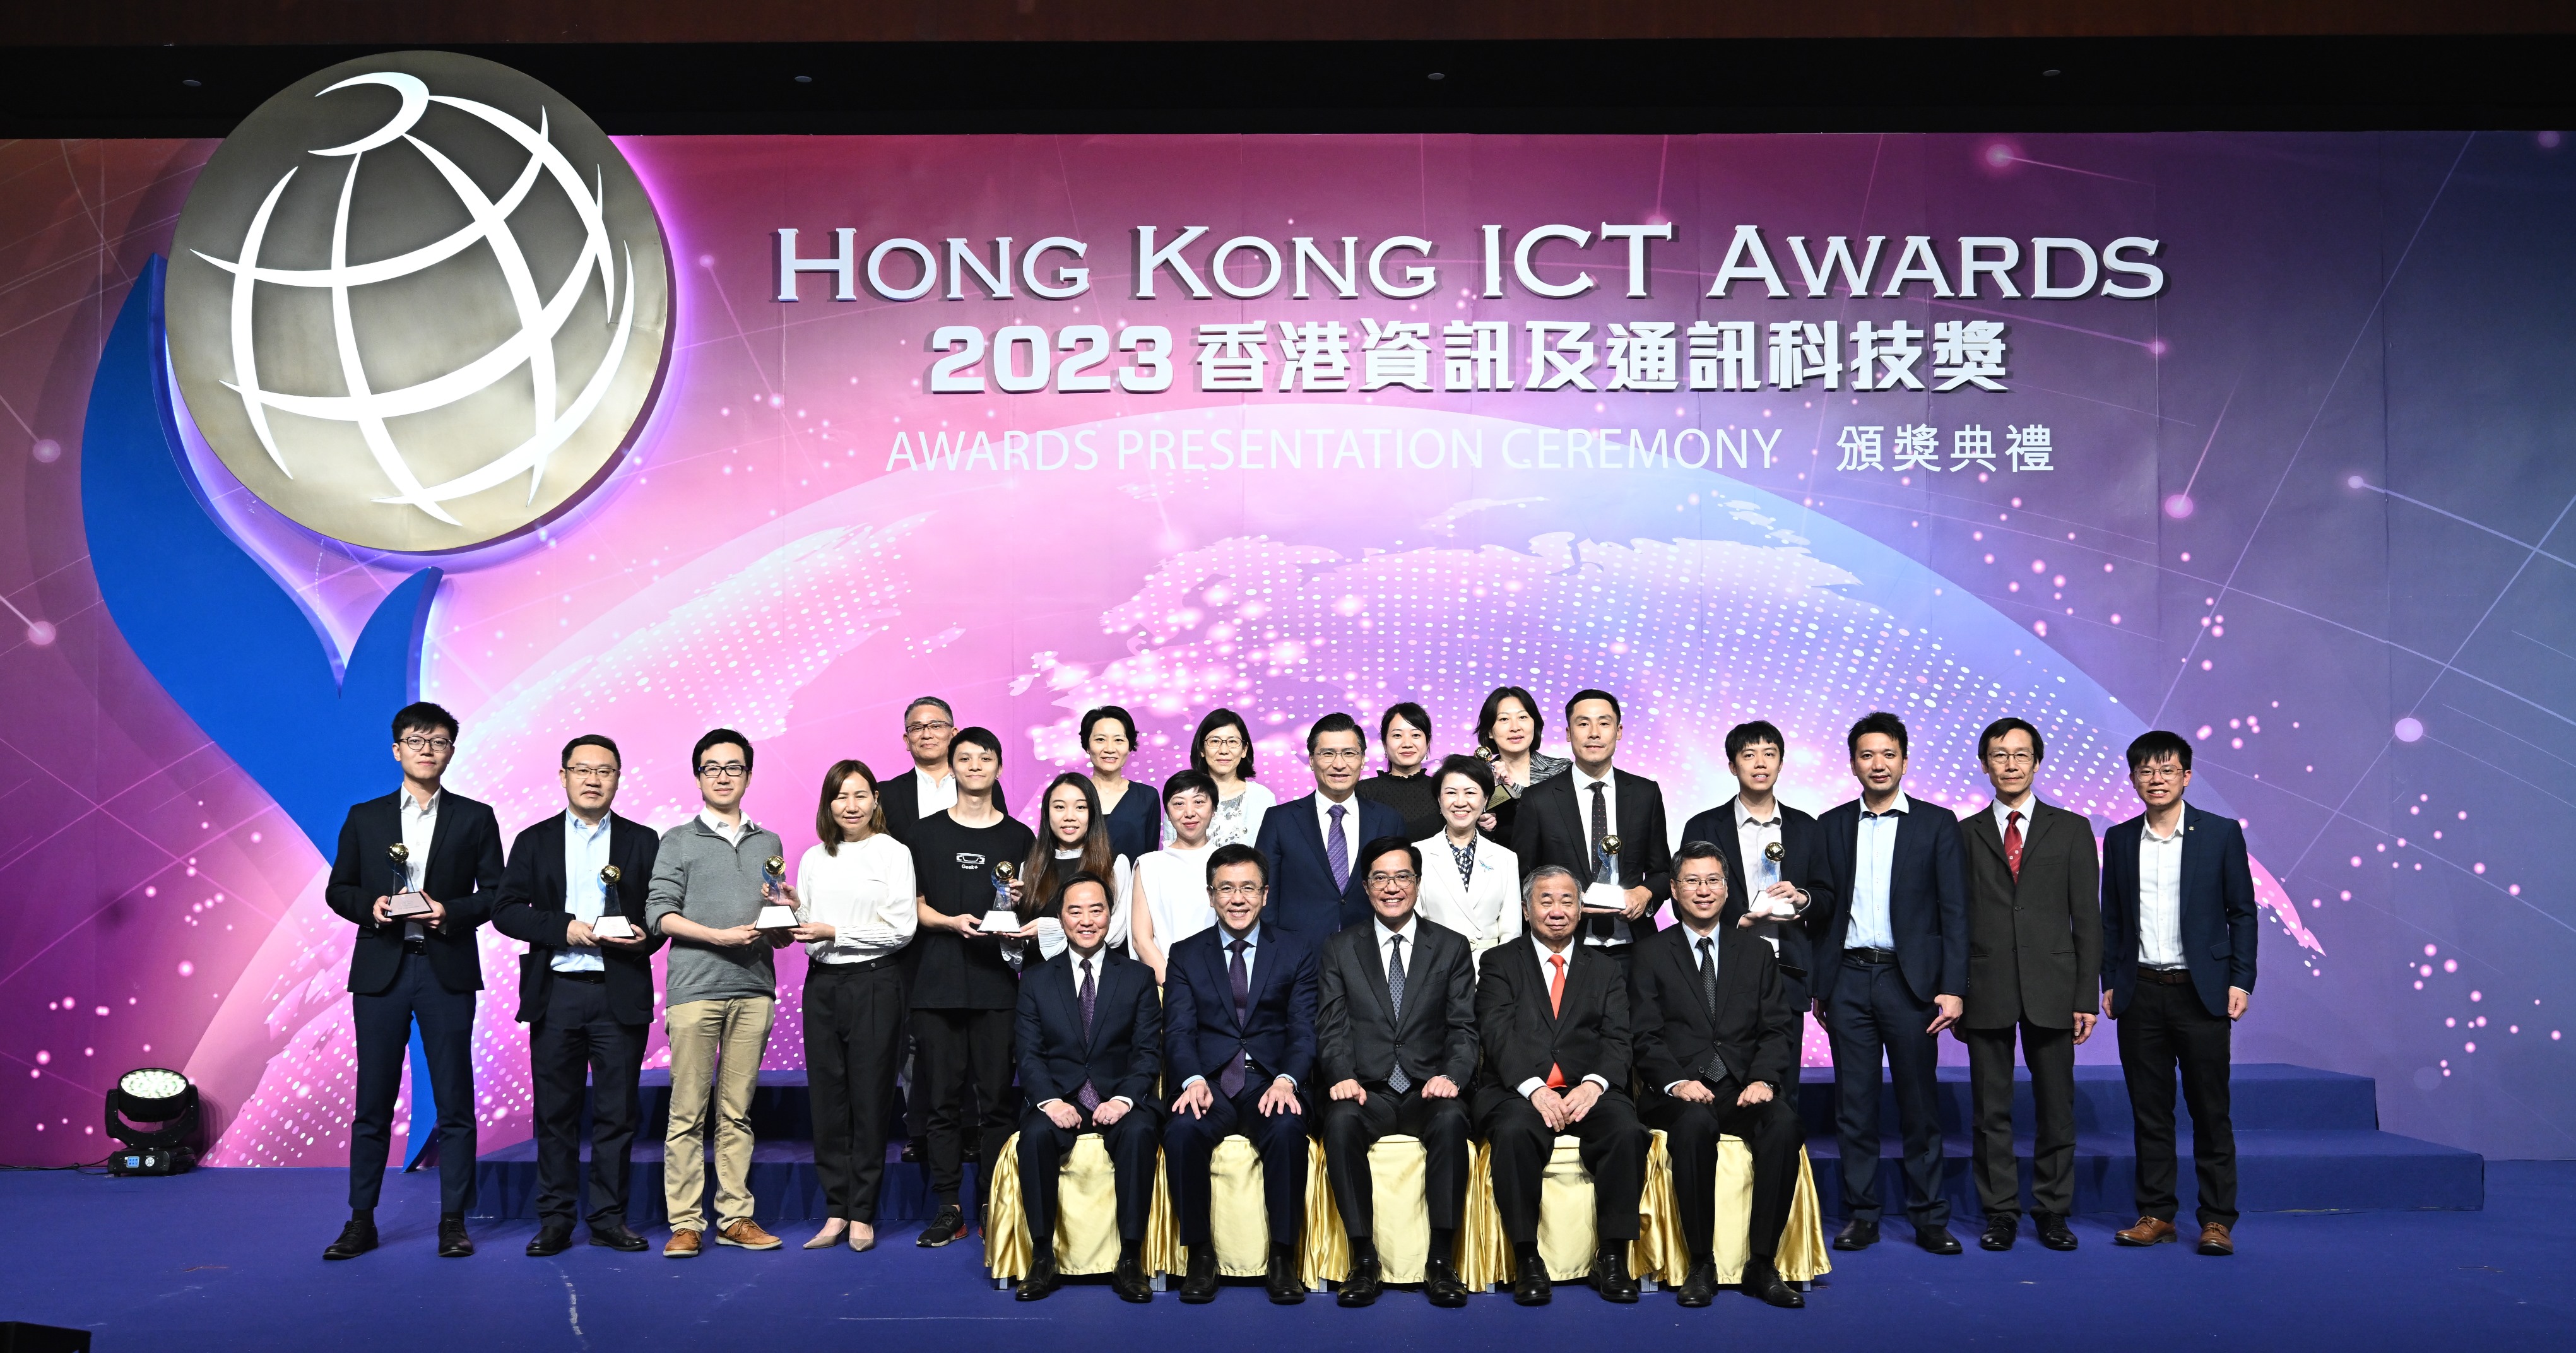 Hong Kong ICT Awards 2023 Smart Mobility Award Winners Group Photo